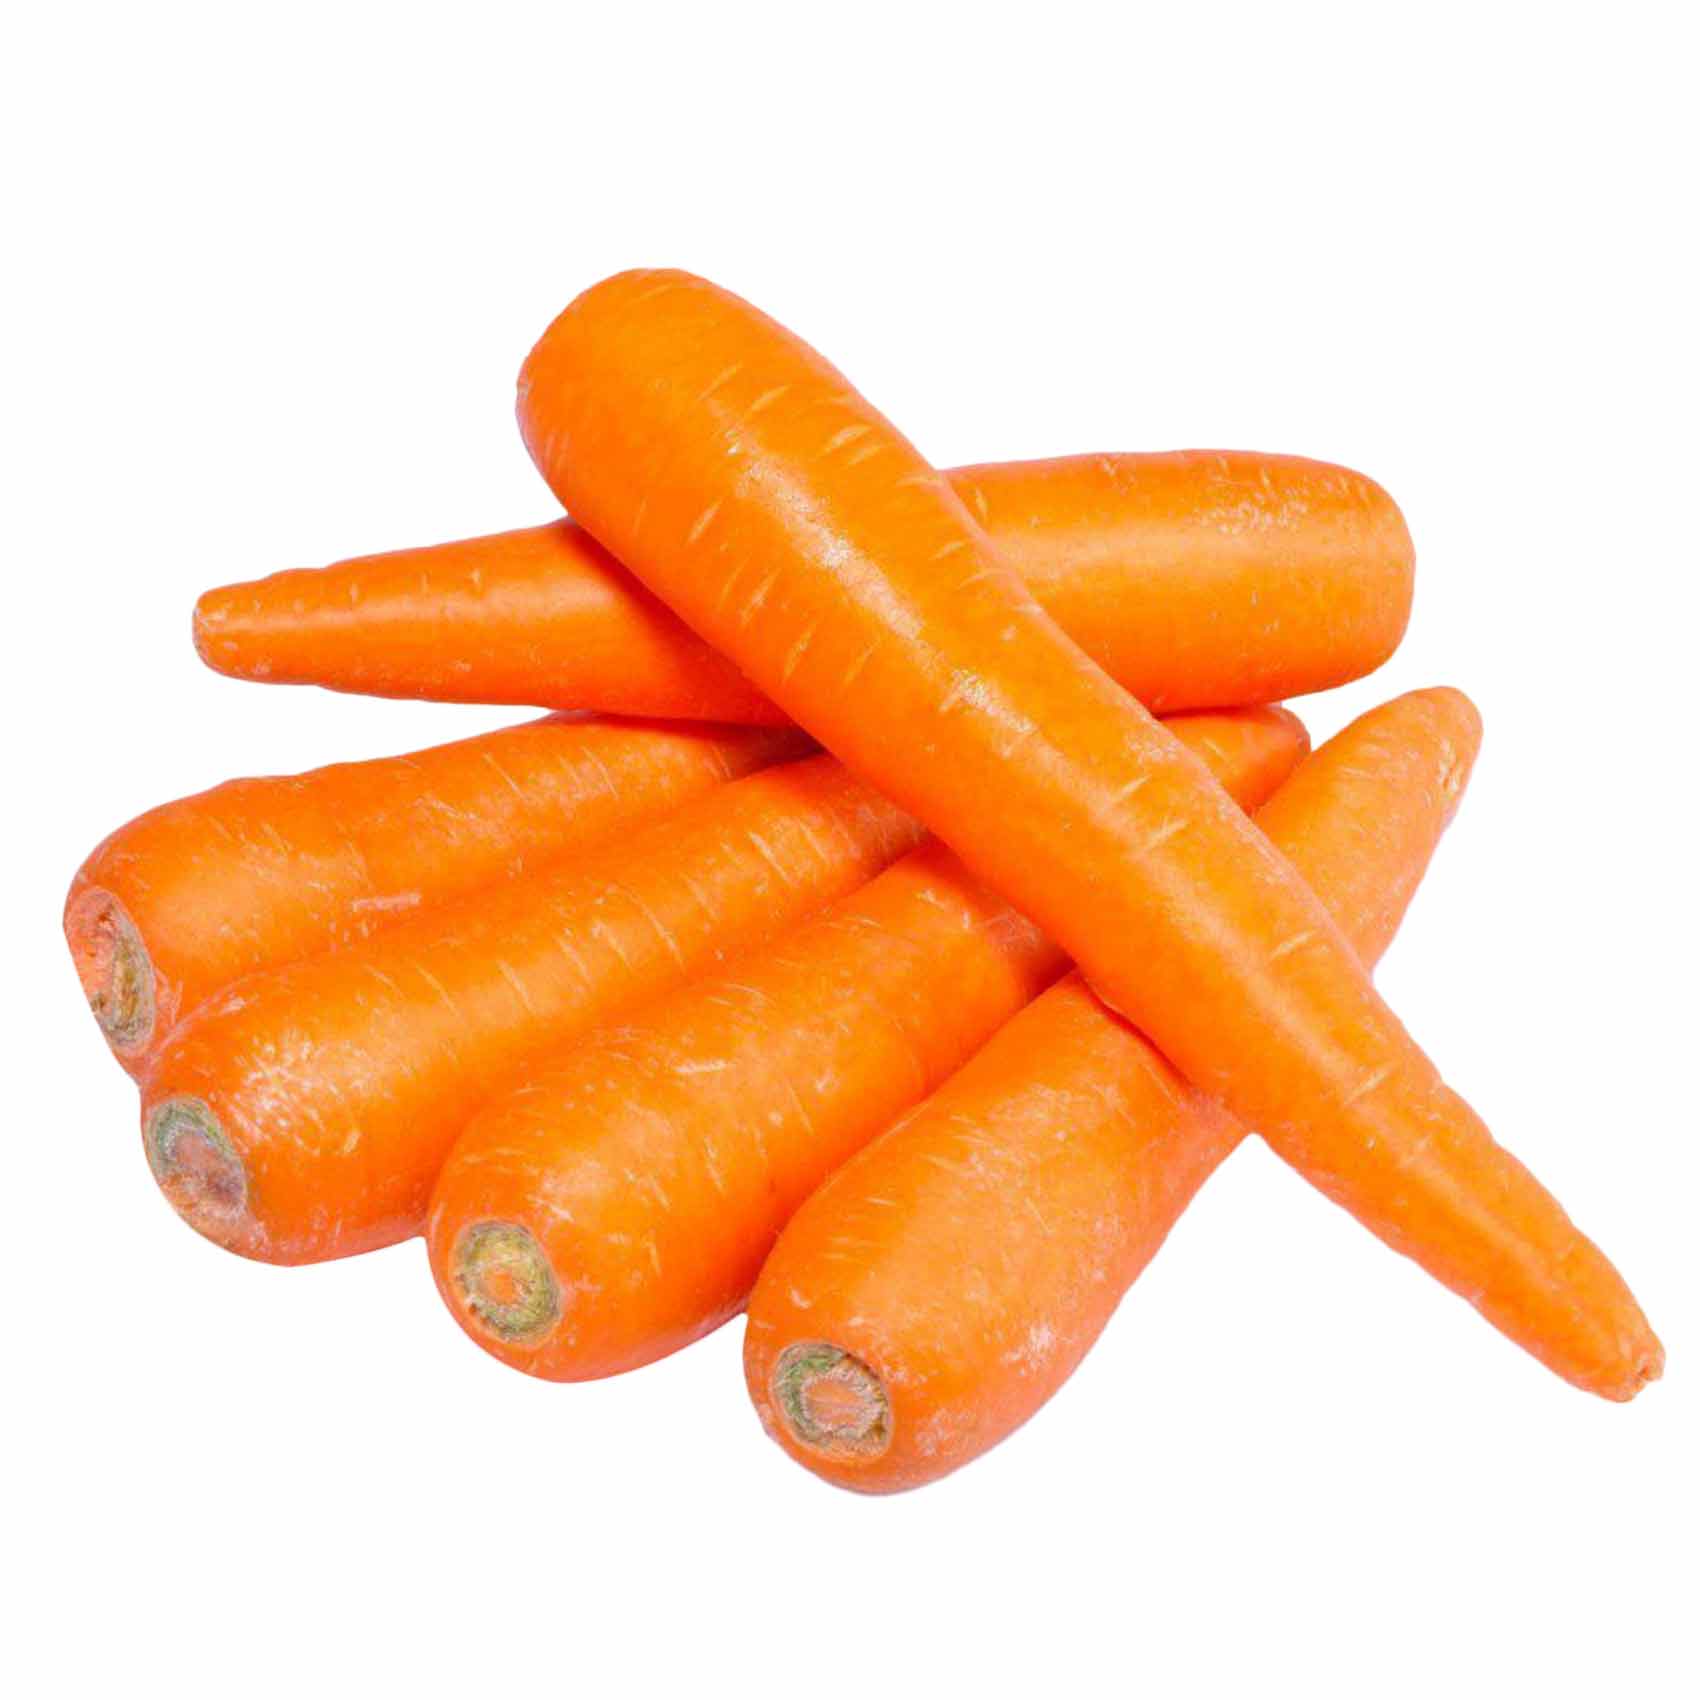 Carrot Local